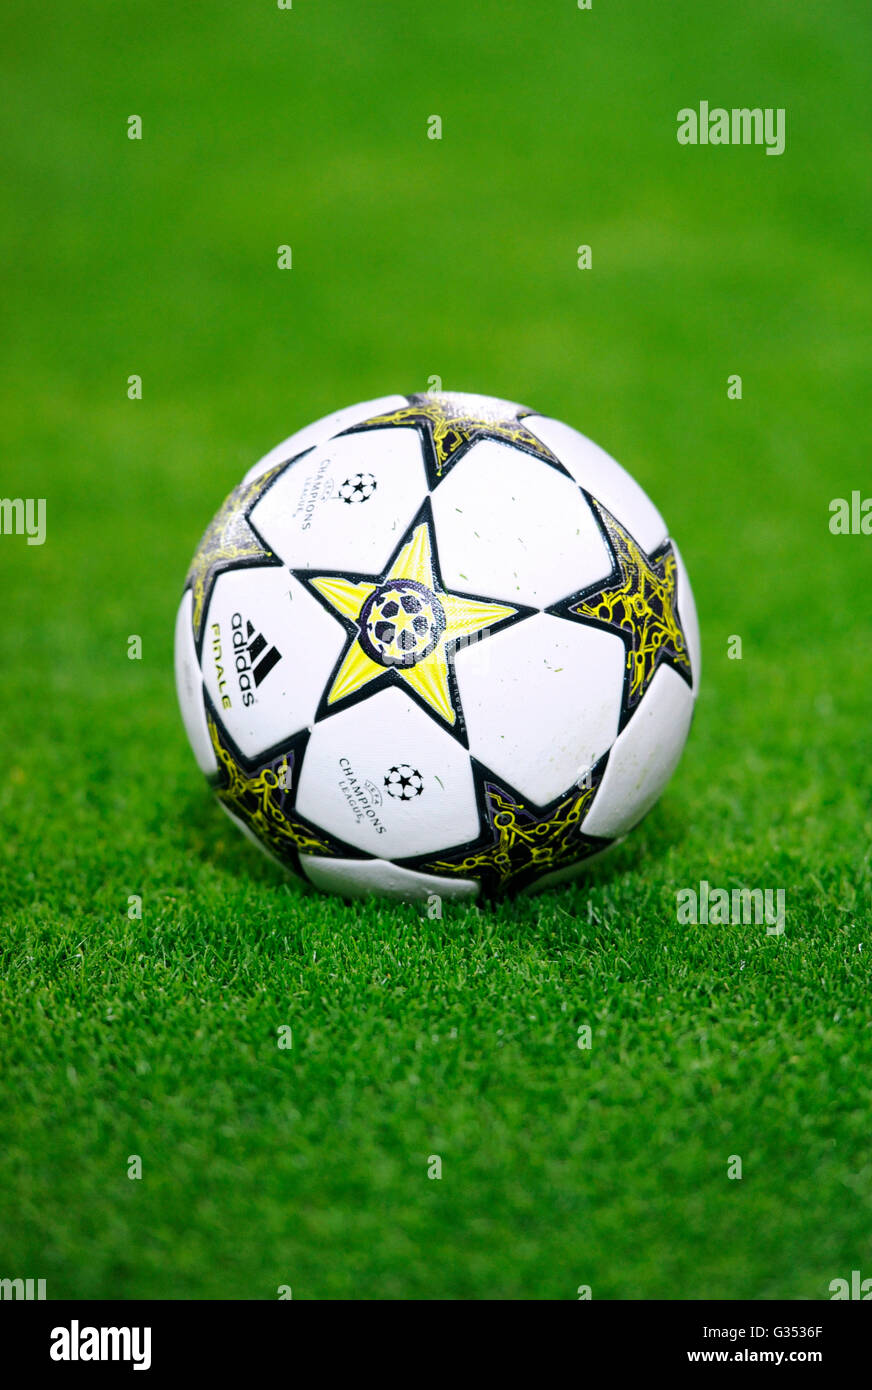 Adidas Champions League ball, UEFA Champions League, Borussia Dortmund  gegen Real Madrid, 2: 1, Signal-Iduna-Park Stadion, Dortmund  Stockfotografie - Alamy